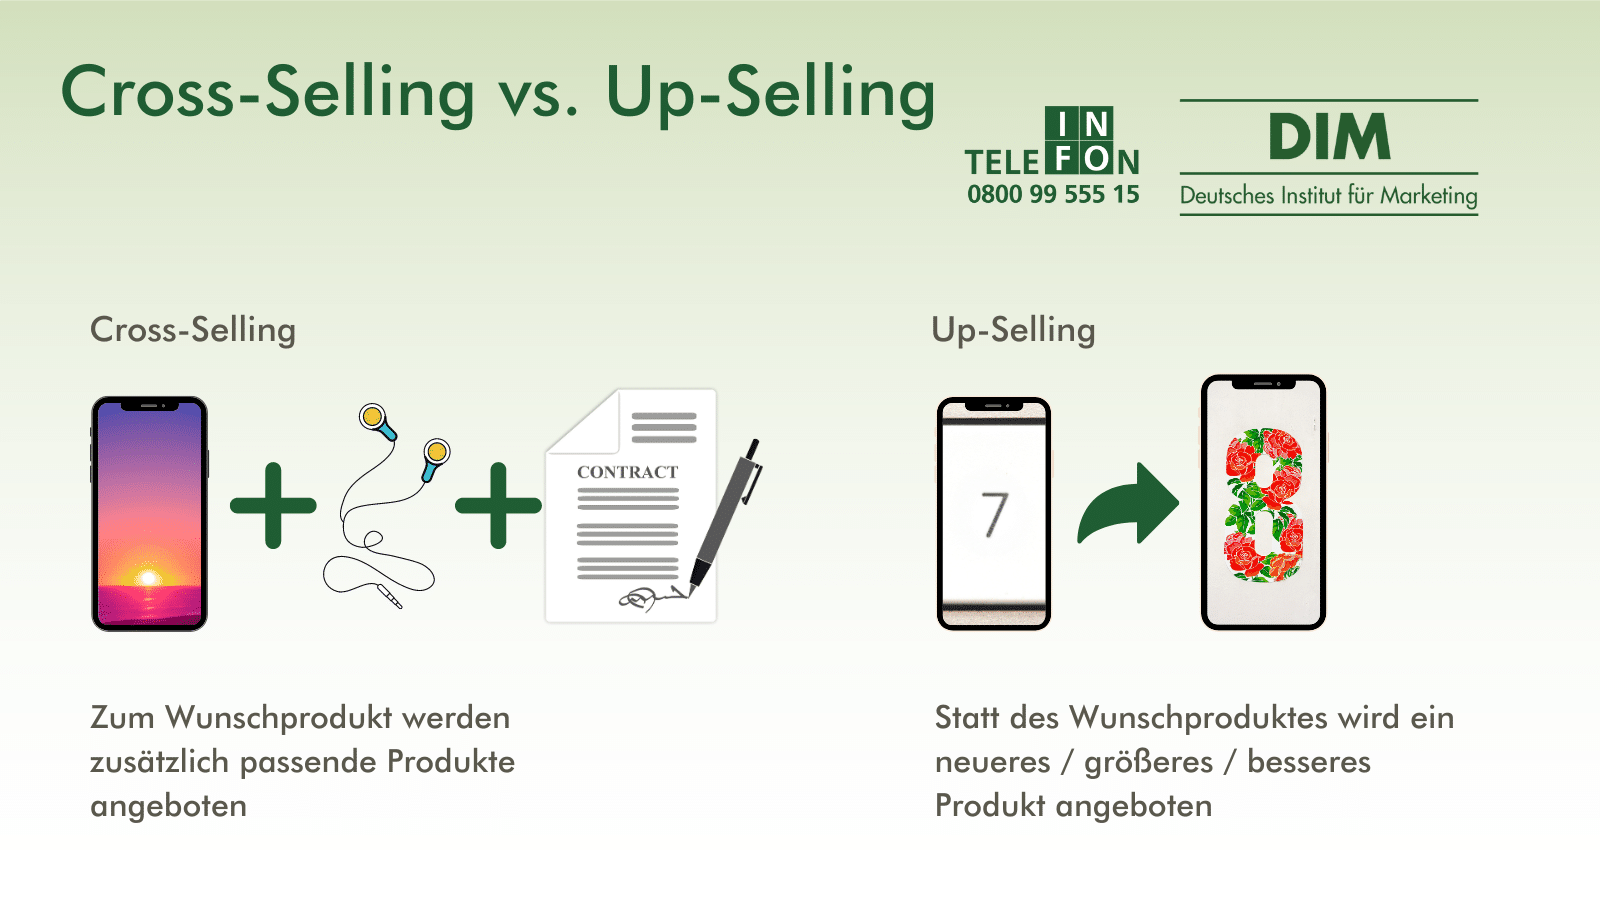 Cross-Selling vs. Up-Selling